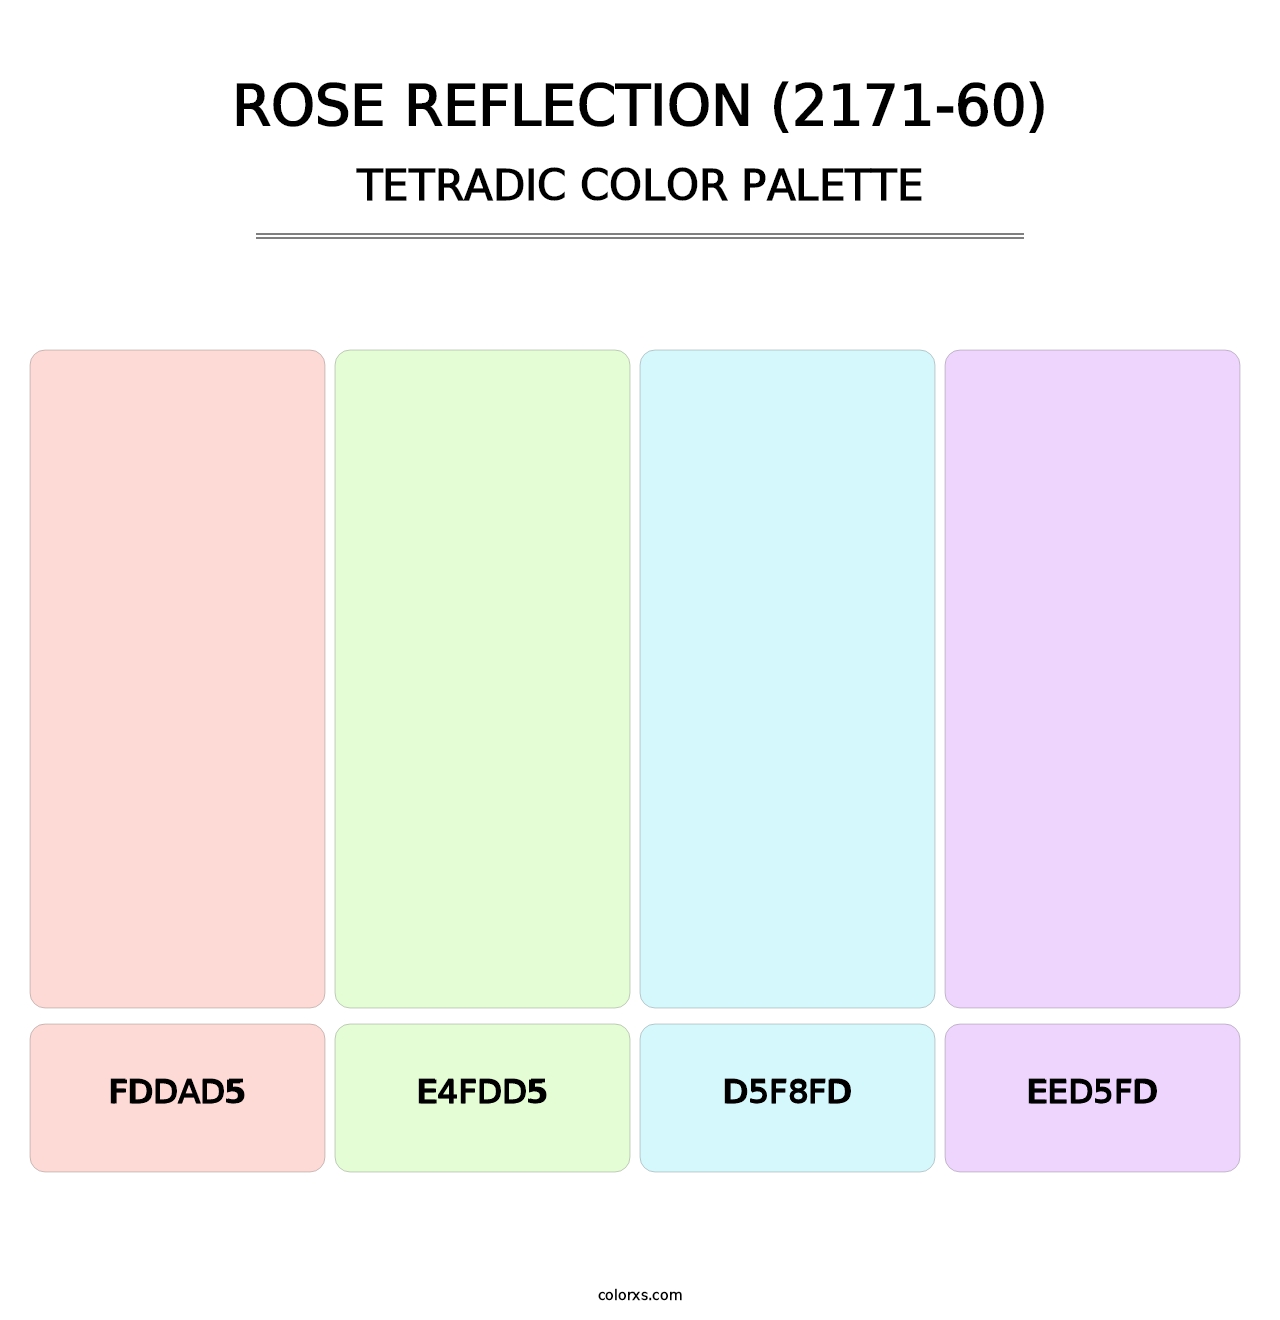 Rose Reflection (2171-60) - Tetradic Color Palette